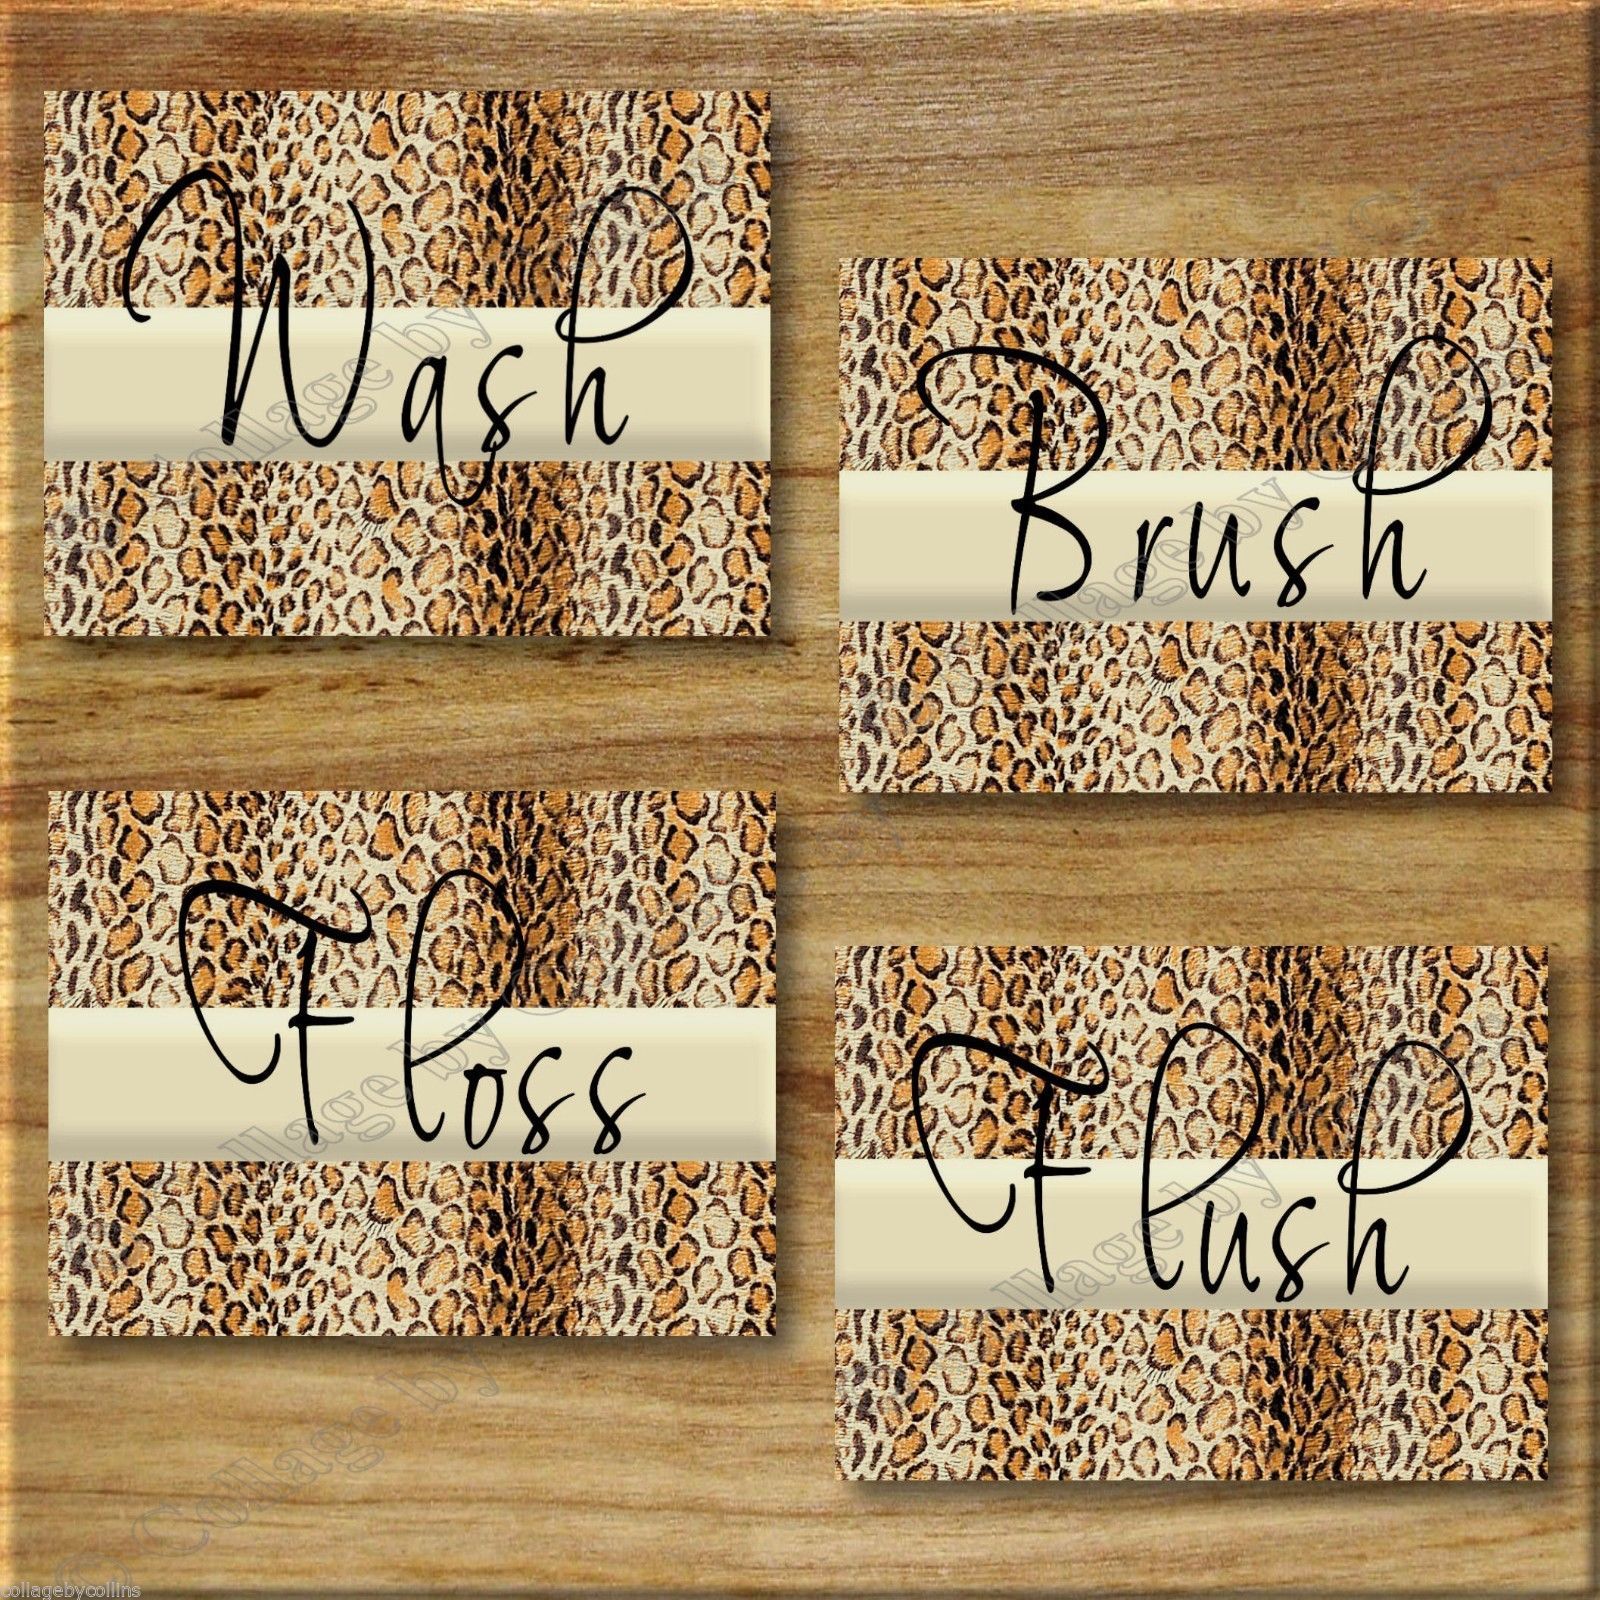 Cheetah Leopard Bathroom Picture Prints WORD Art Wall Decor WASH BRUSH FLUSH + - $14.95